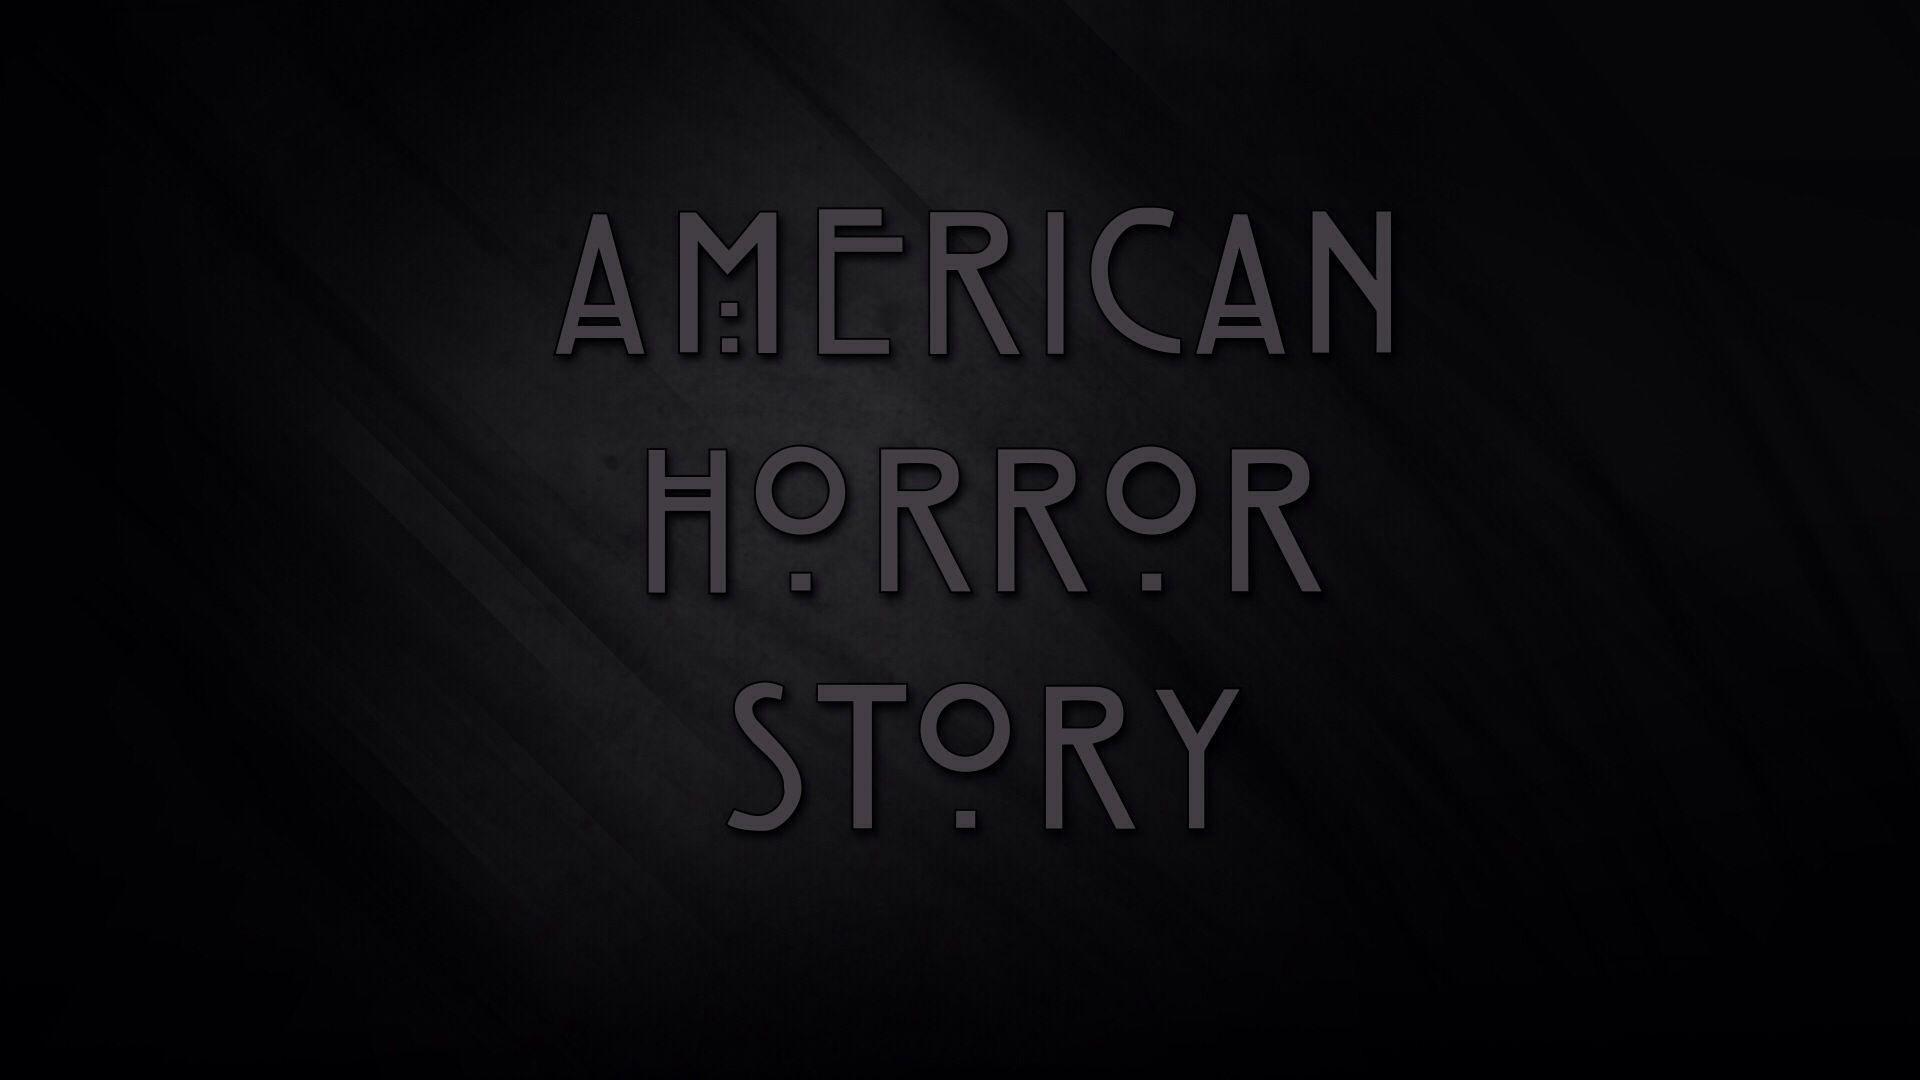 American Horror Story HD Wallpapers for desktop download